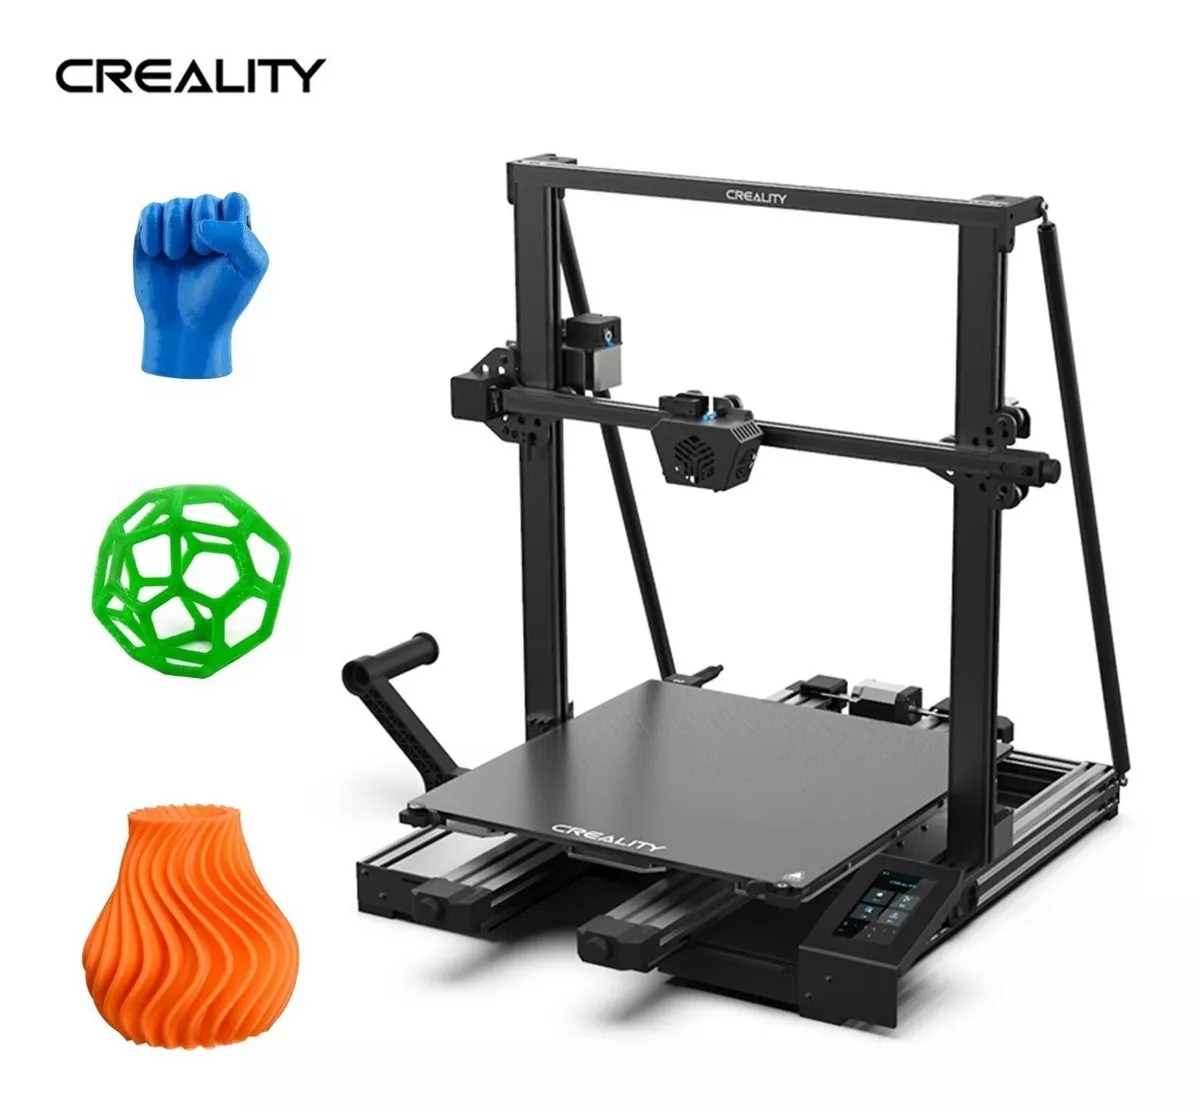 Creality Cr-6 Max Impresora 3d !!disponible!!